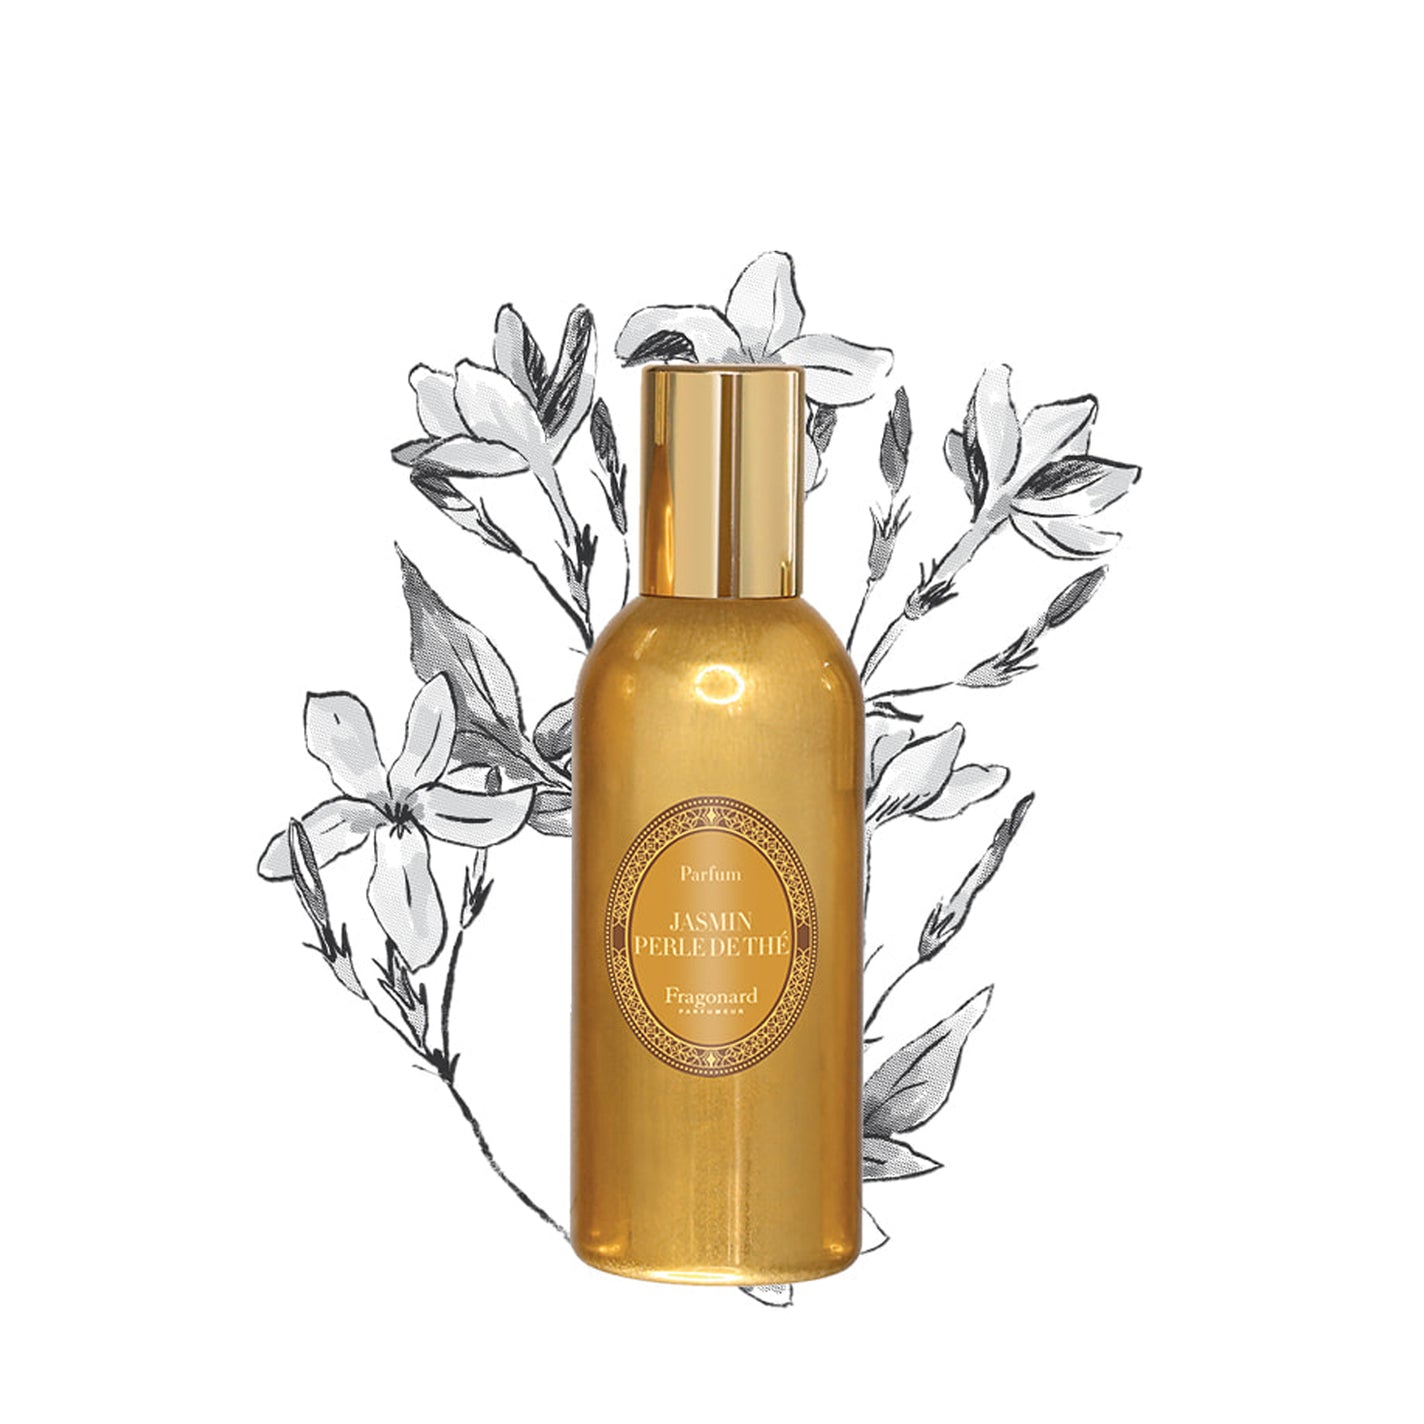 Fragonard Jasmin Perle de The 'Estagon' Parfum - 30ml